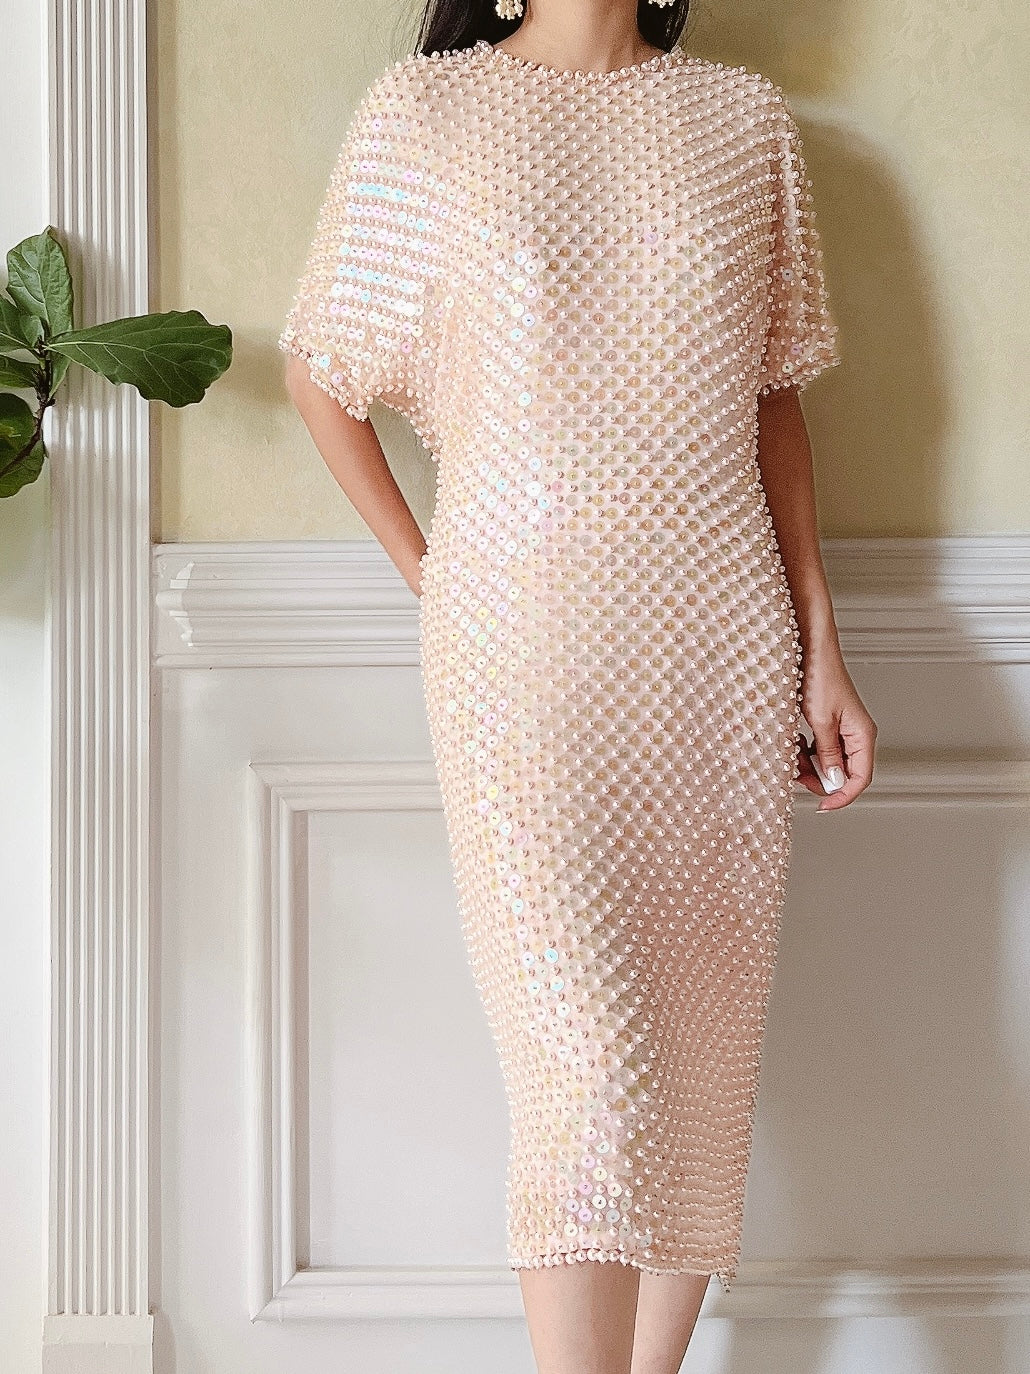 Vintage Shell Pink Pearl/Sequins Dress - M/L